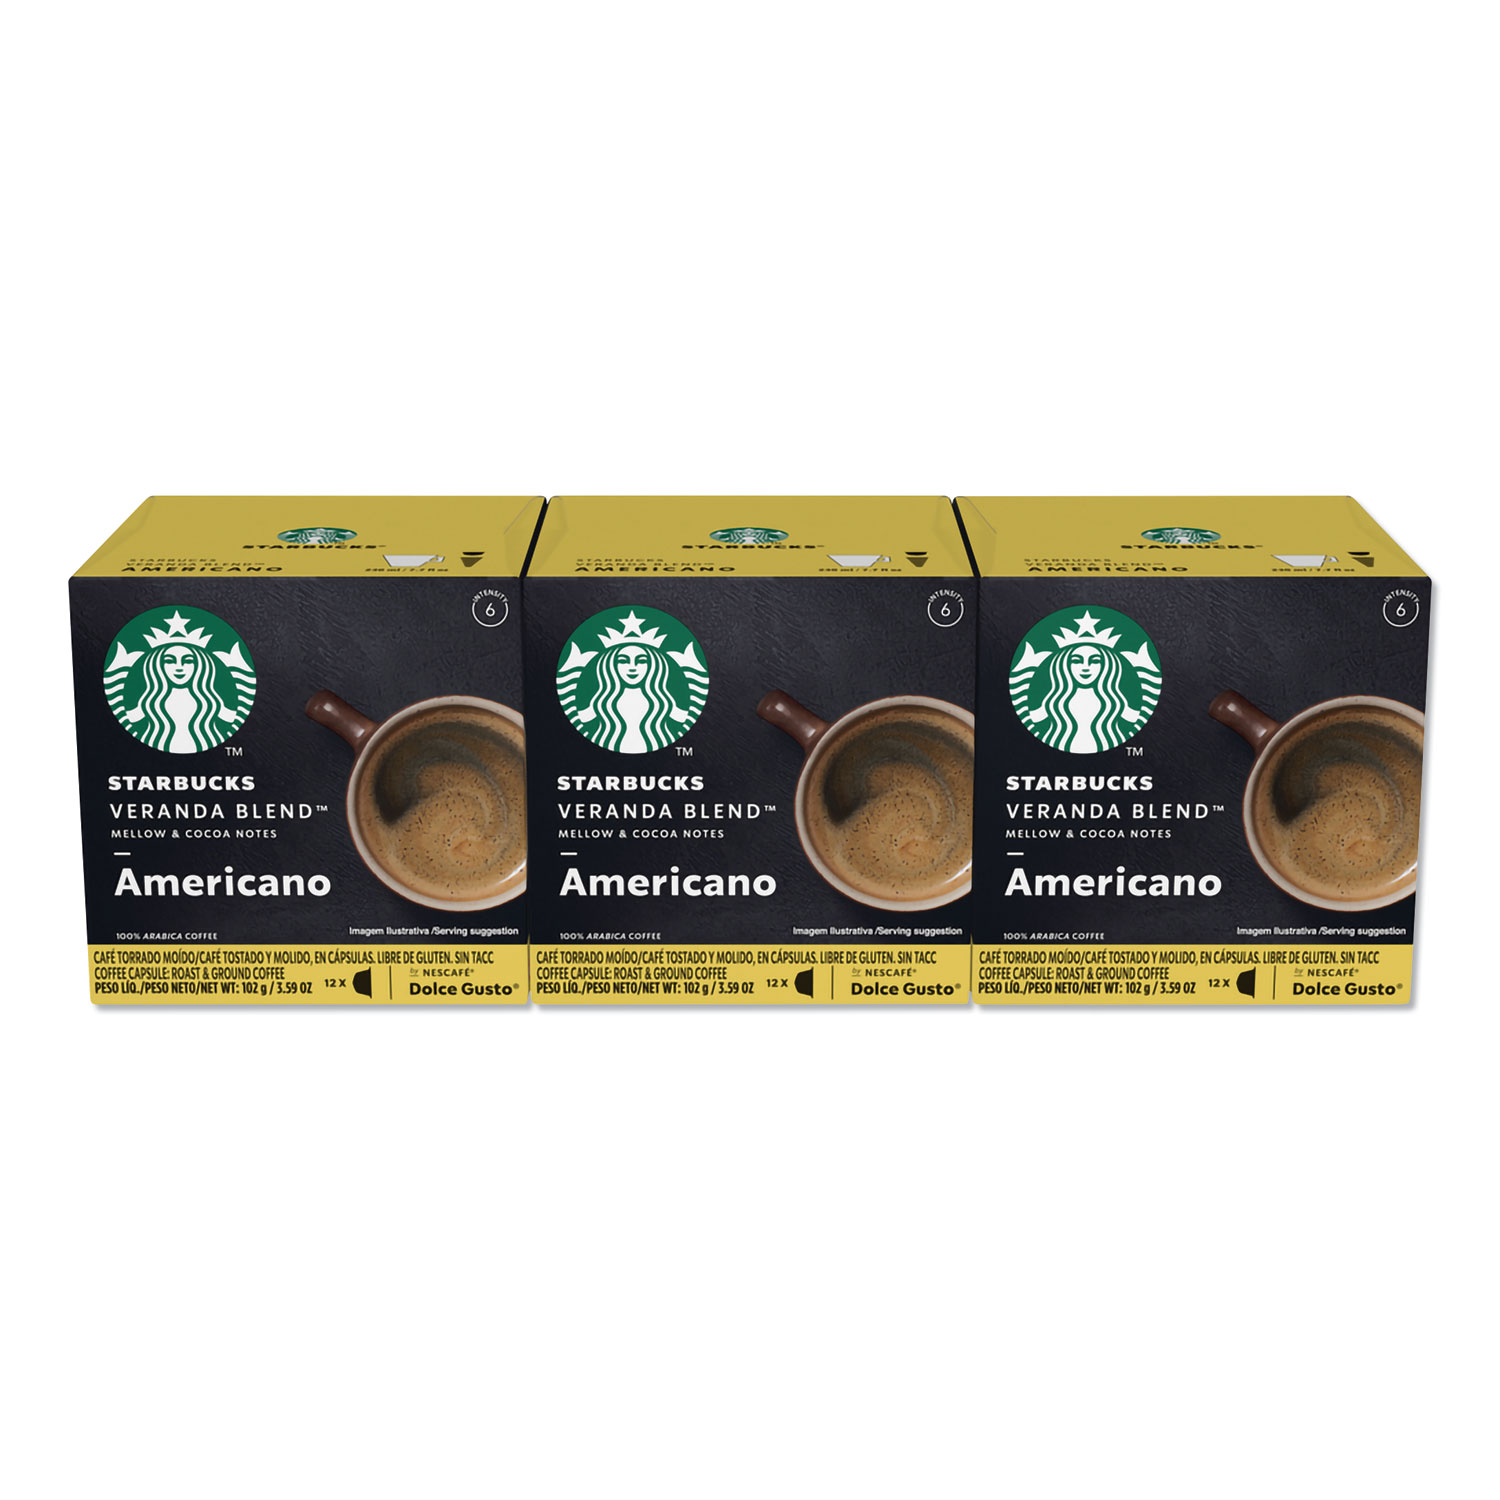  NESCAFÉ Dolce Gusto 94245 Starbucks Coffee Capsules, Veranda Blend, 36/Carton (NES94245) 